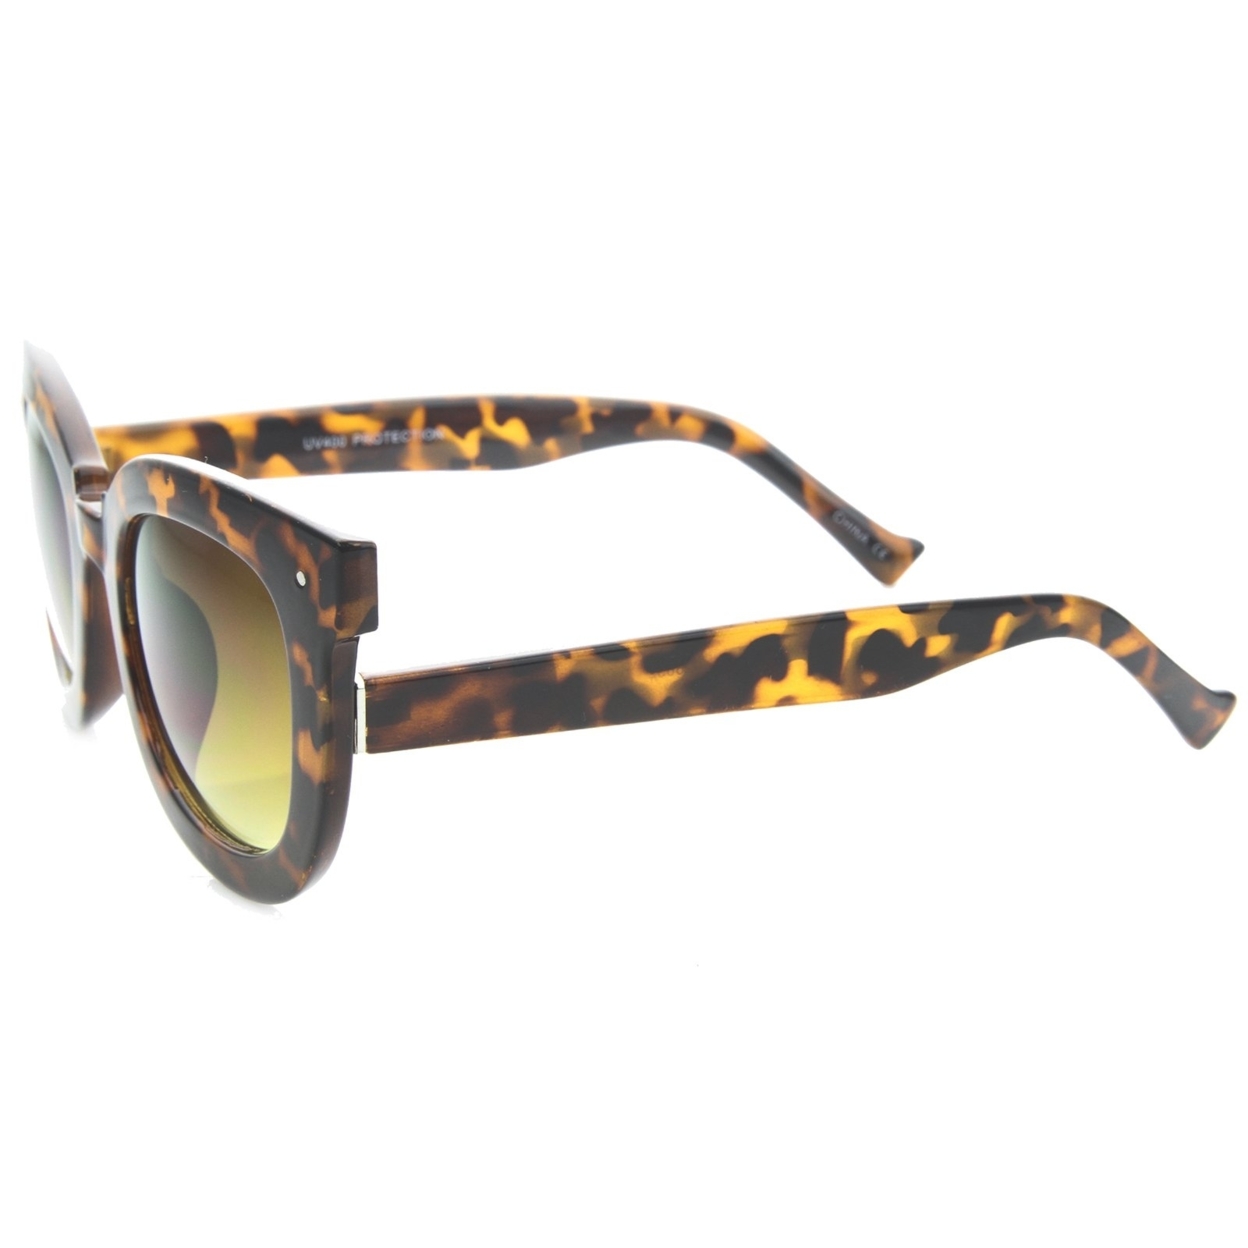 Womens Oversized Butterfly Horn Rimmed Round Cat Eye Sunglasses 67mm - Black / Smoke